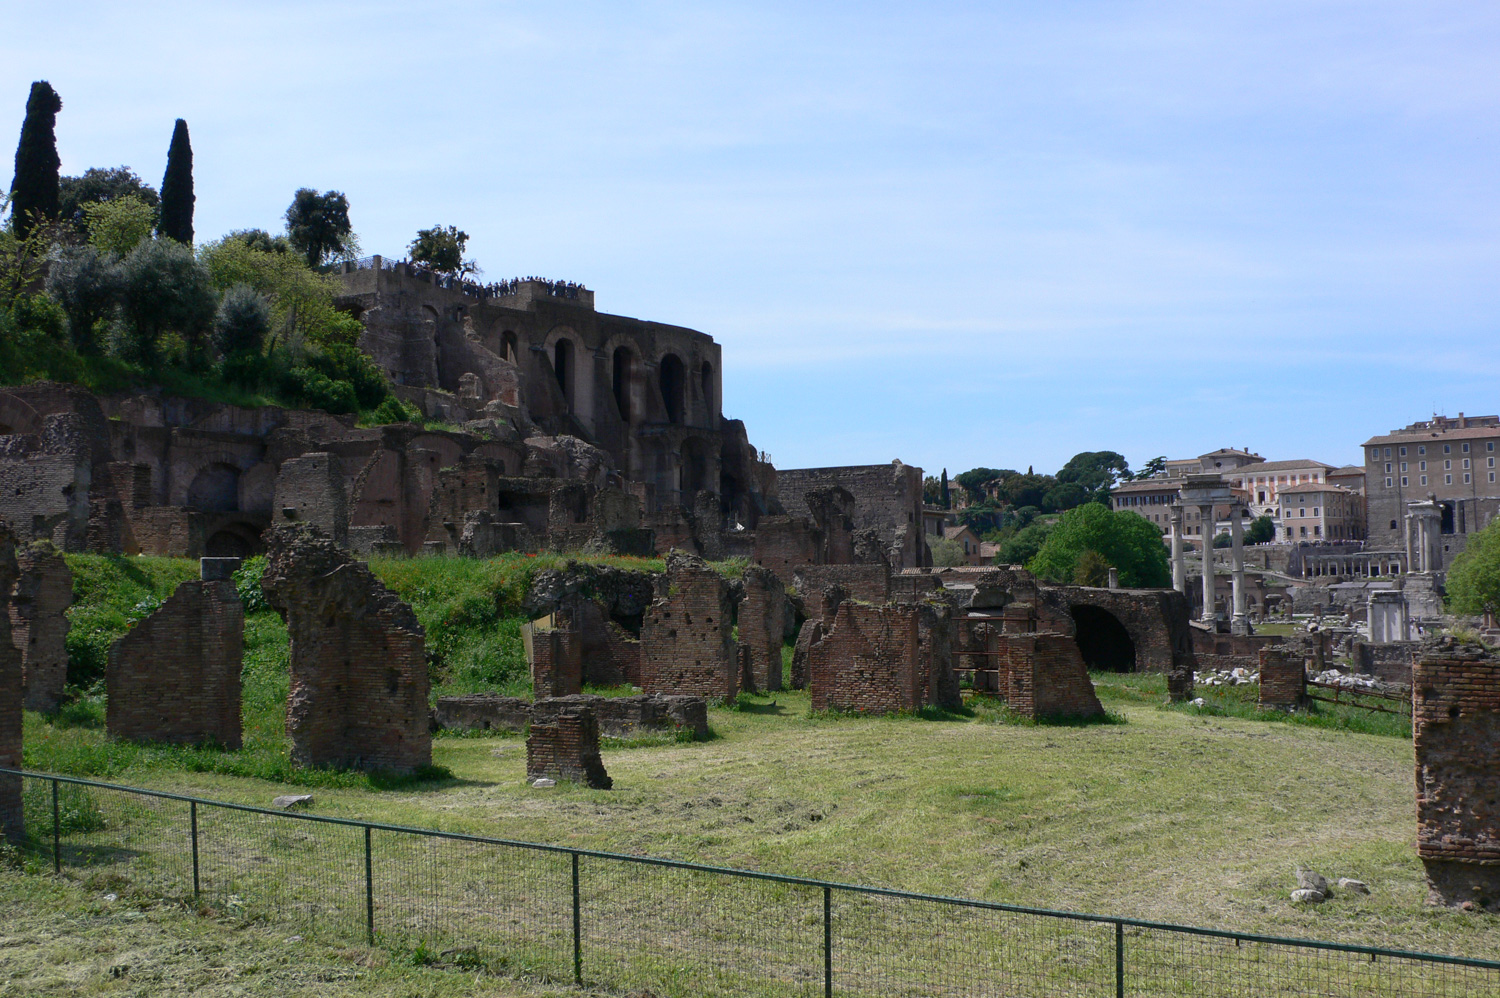 The Rorum Rome